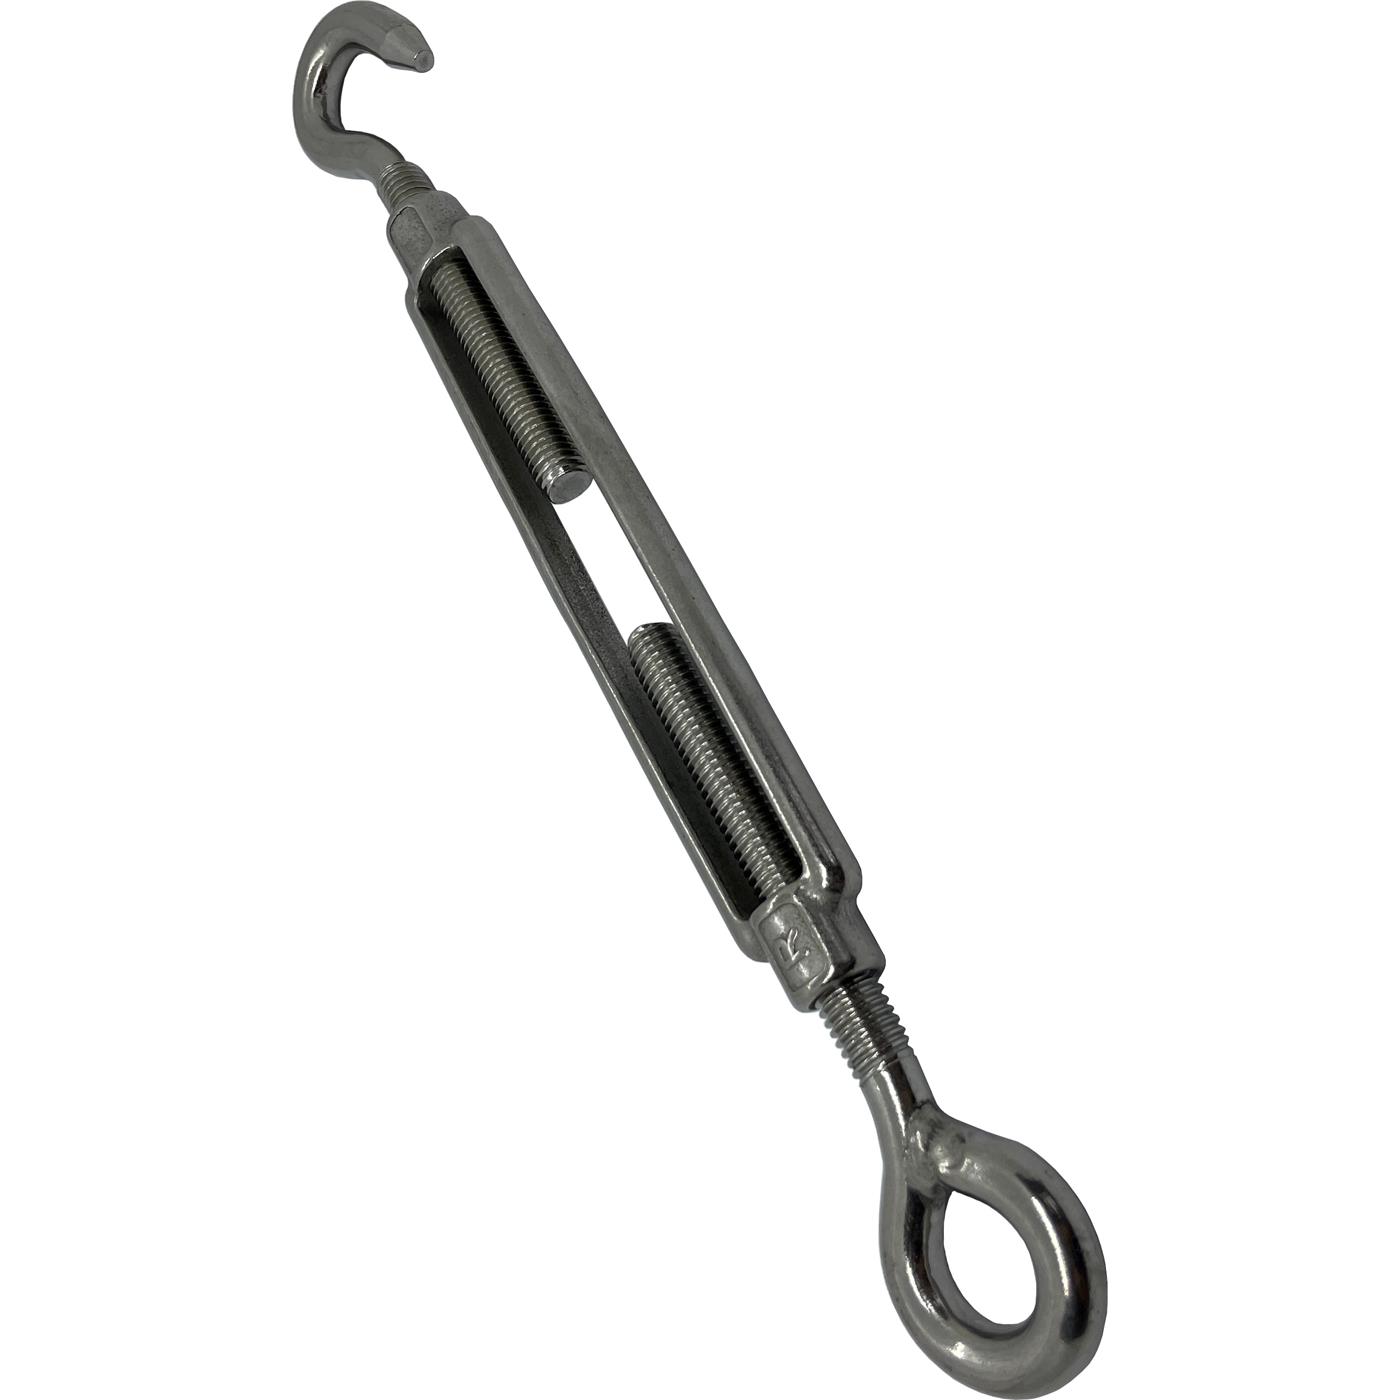 Rope tensioner Eyelet-Hook Stainless steel V4A 316 M5 Turnbuckle Shroud clamp